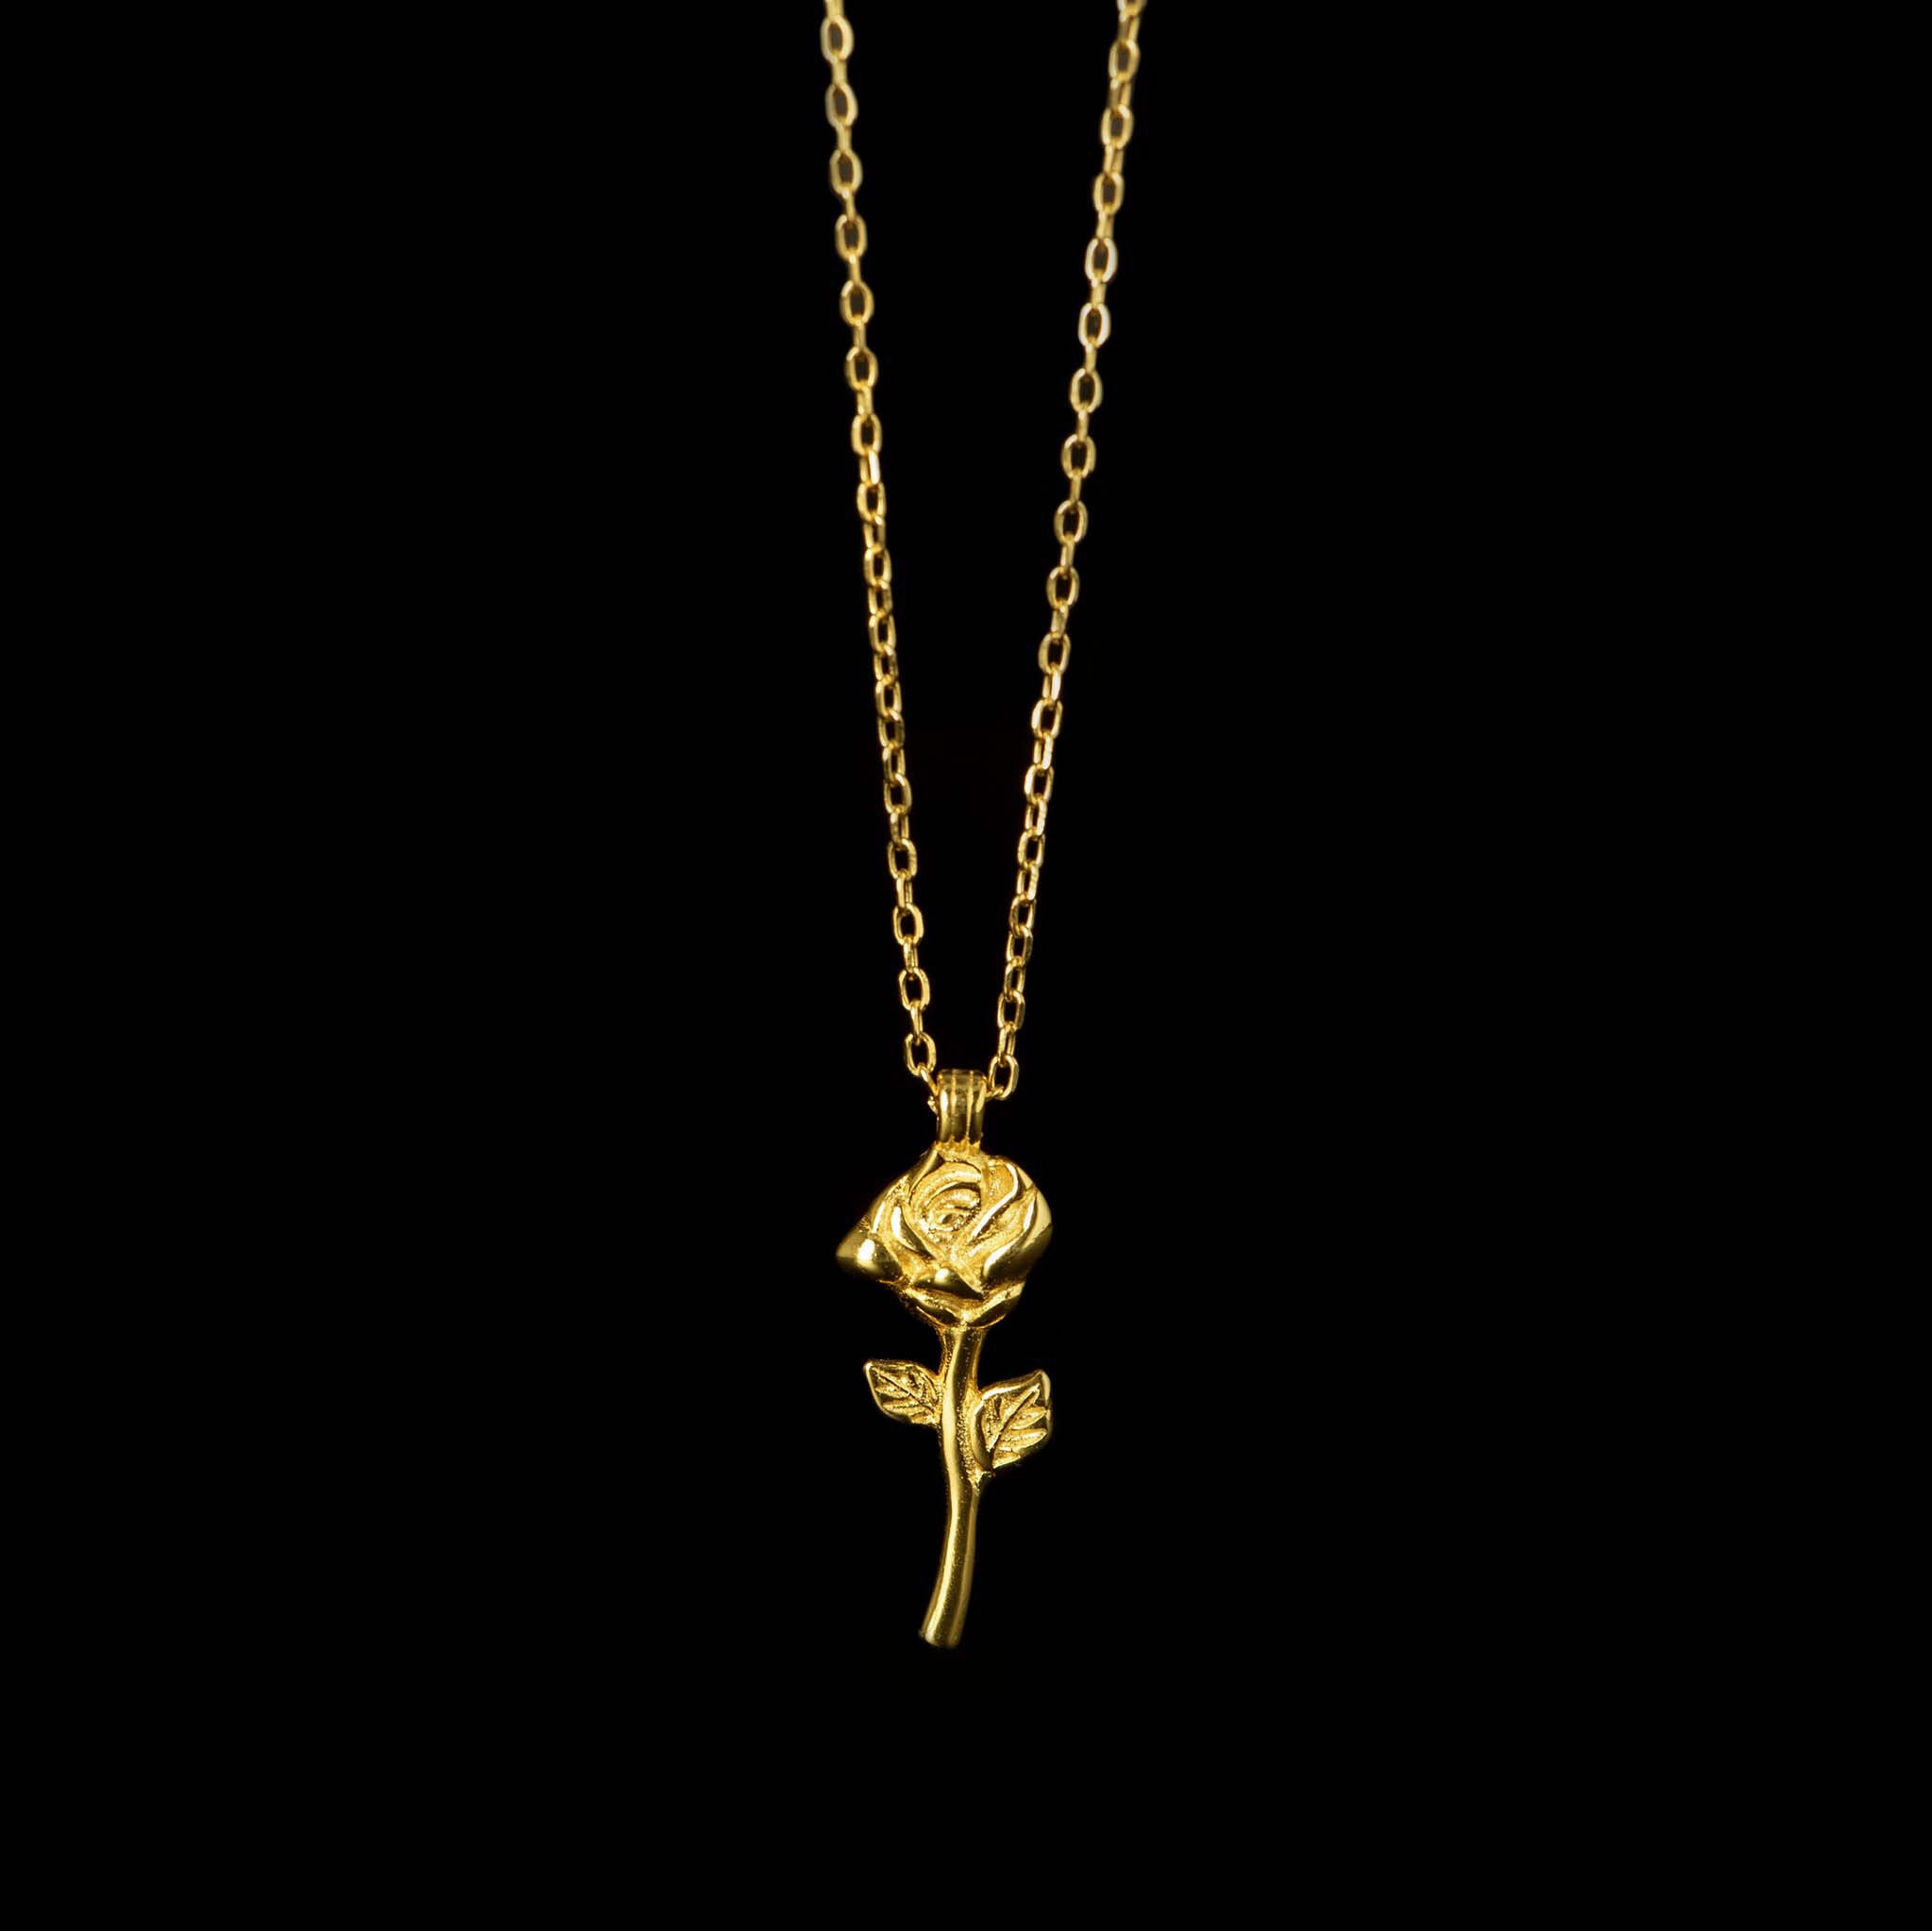 Sterling Forever Beaded Necklace in Rose Gold at Nordstrom Rack